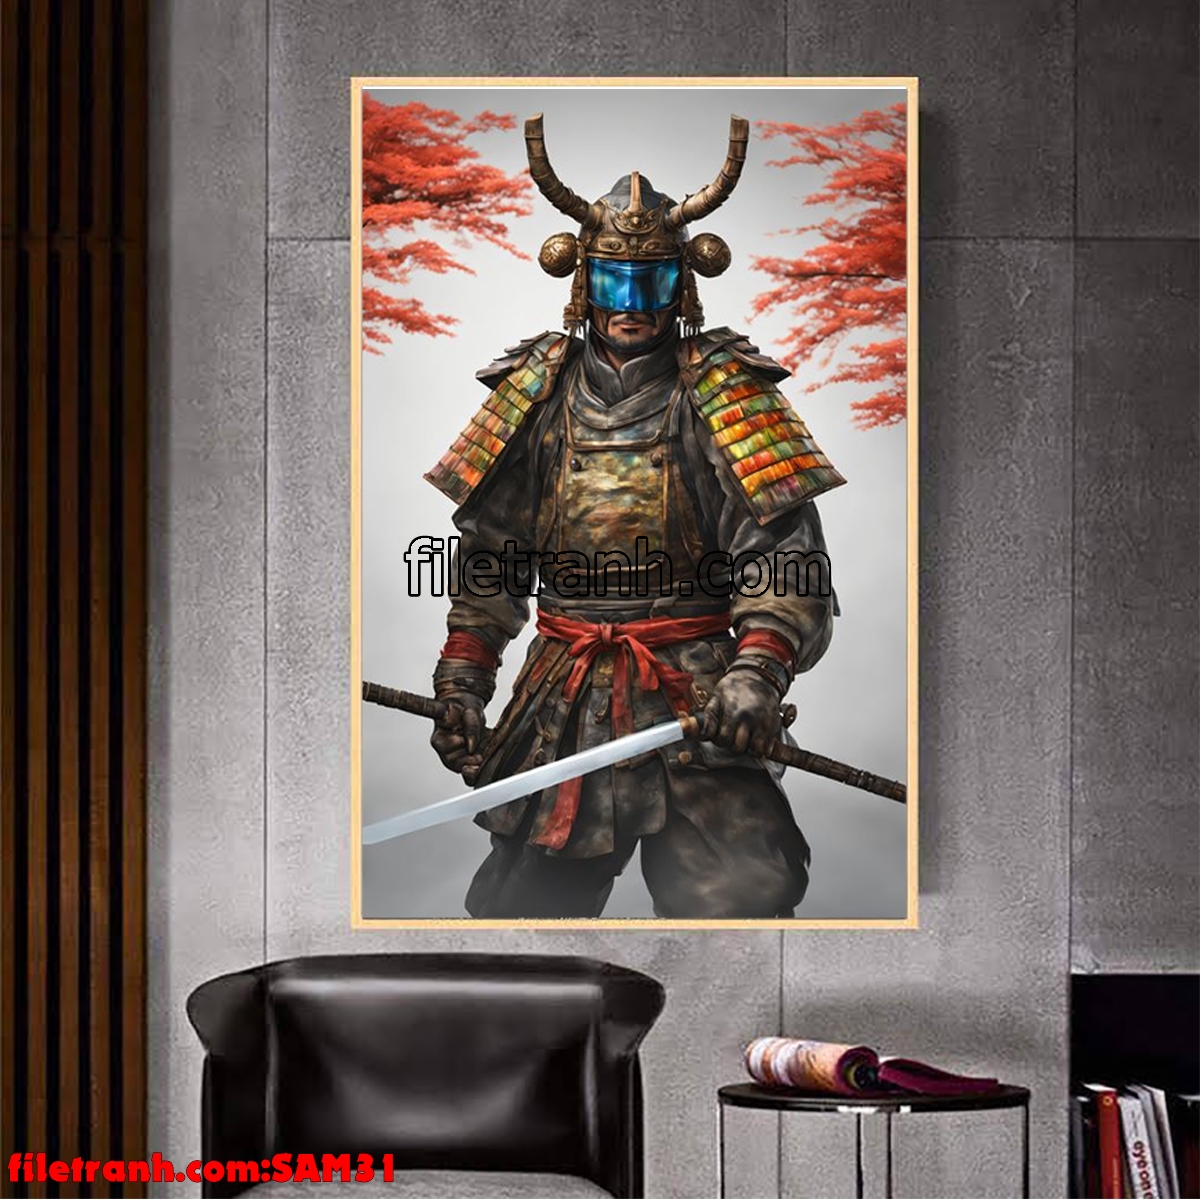 https://filetranh.com/samurai/file-tranh-samurai-vo-si-nhat-ban-sam31.html